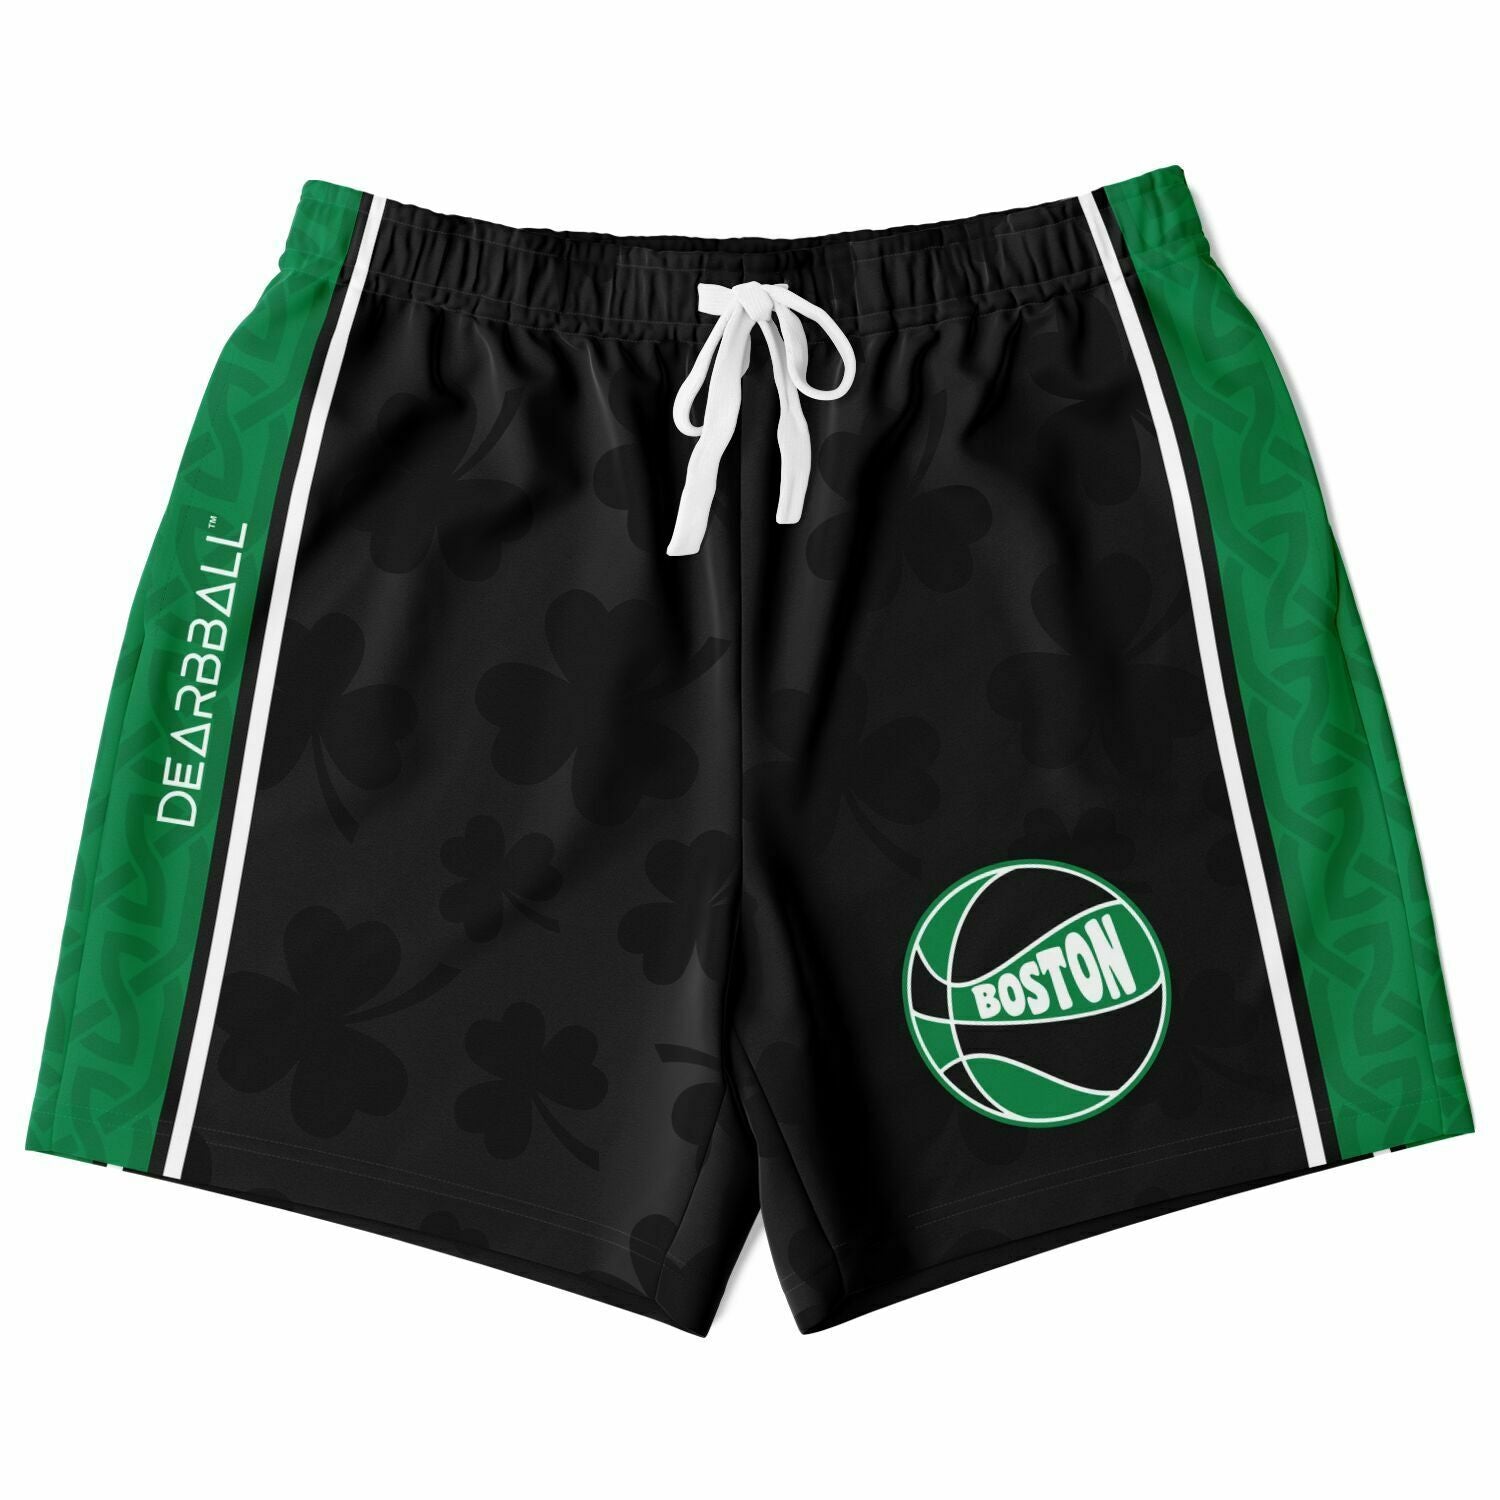 Short-Boston-Celtics-Dearbball-clothes-brand-france